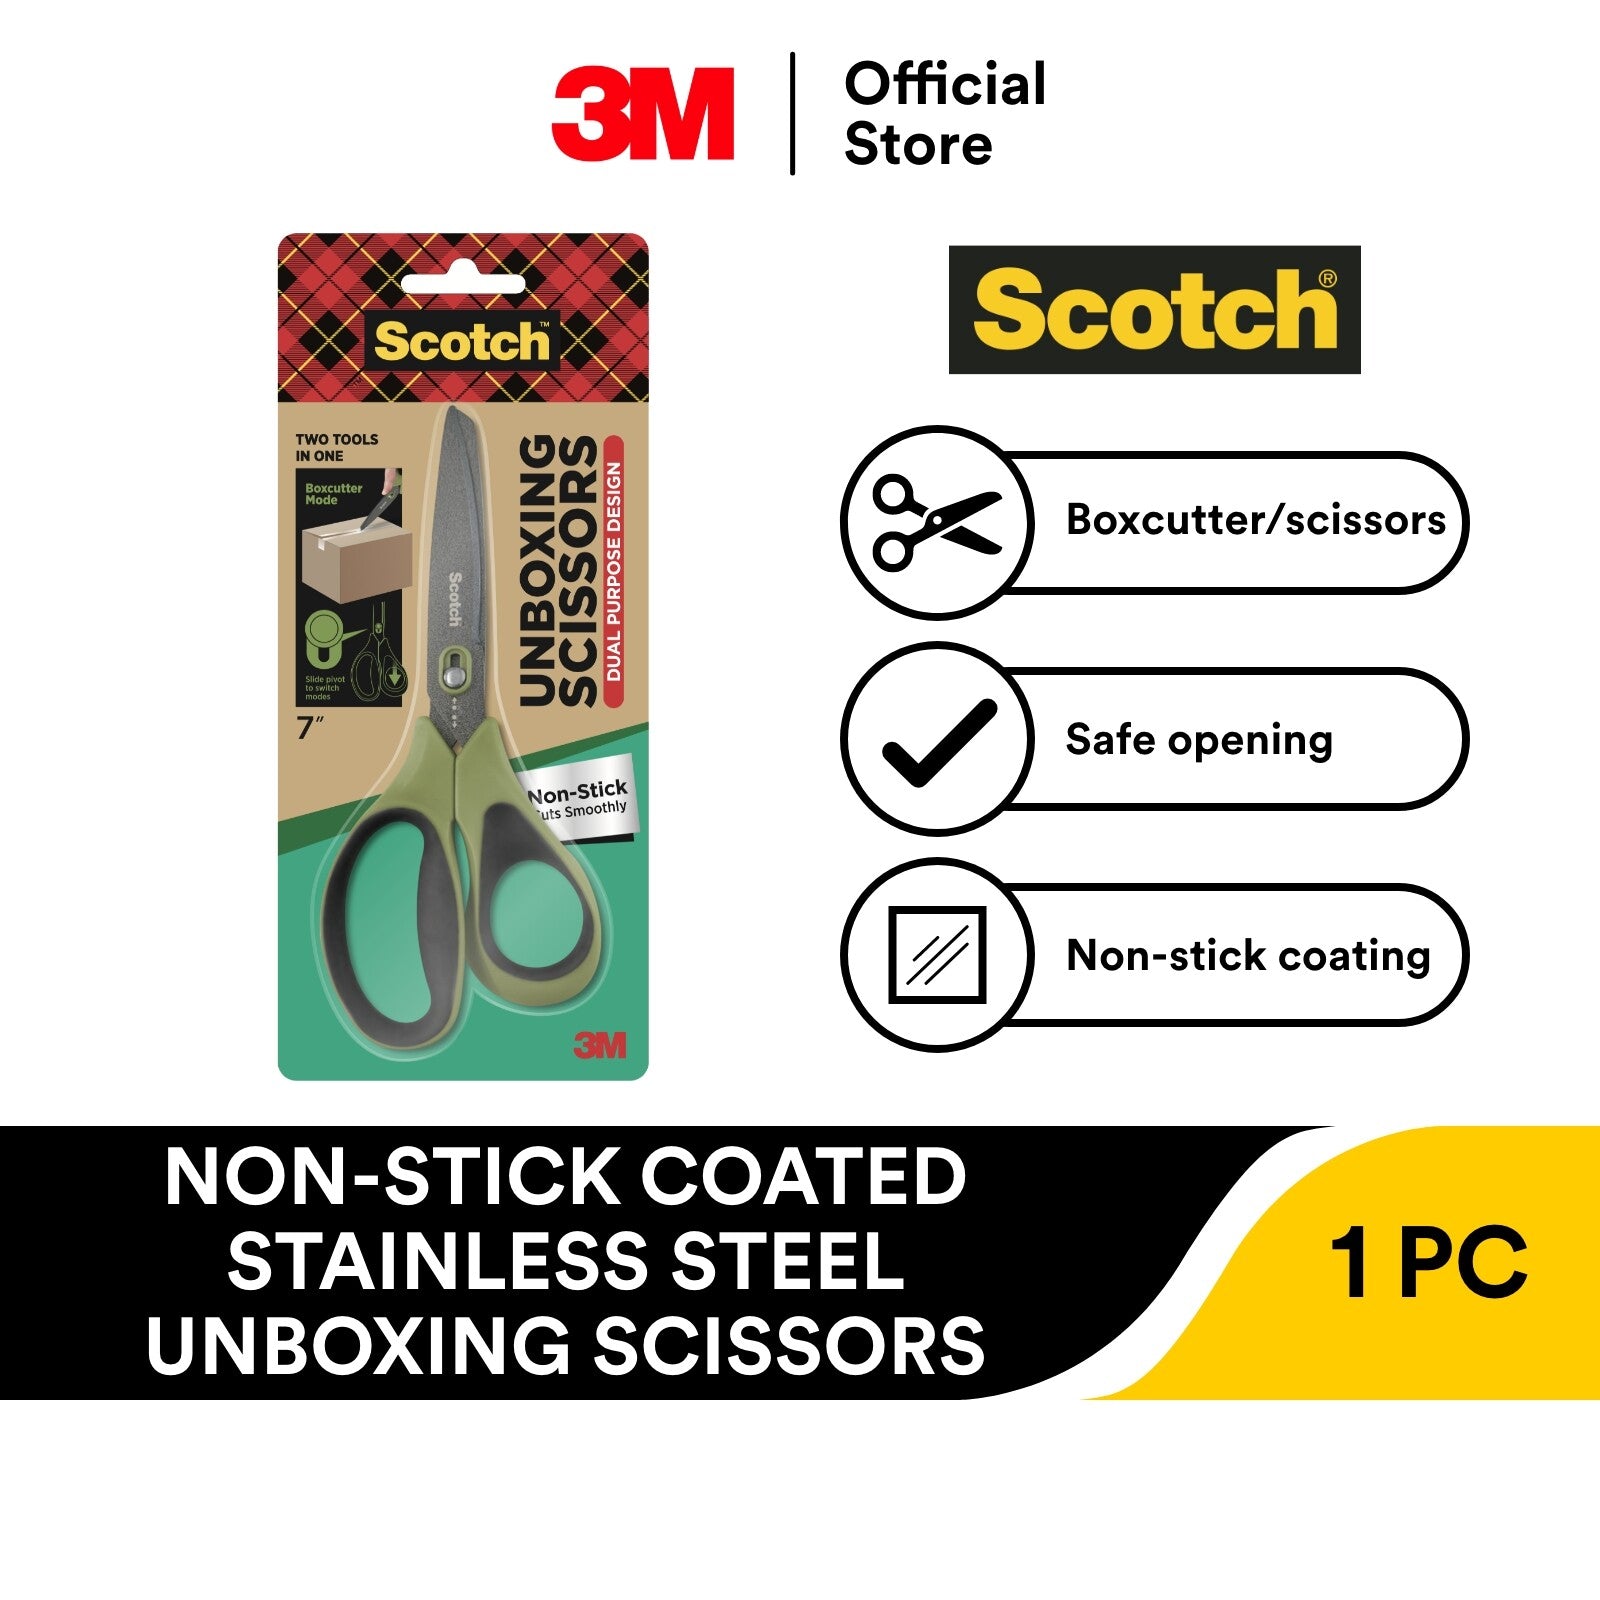 3M Scotch Non-Stick Unboxing Scissors